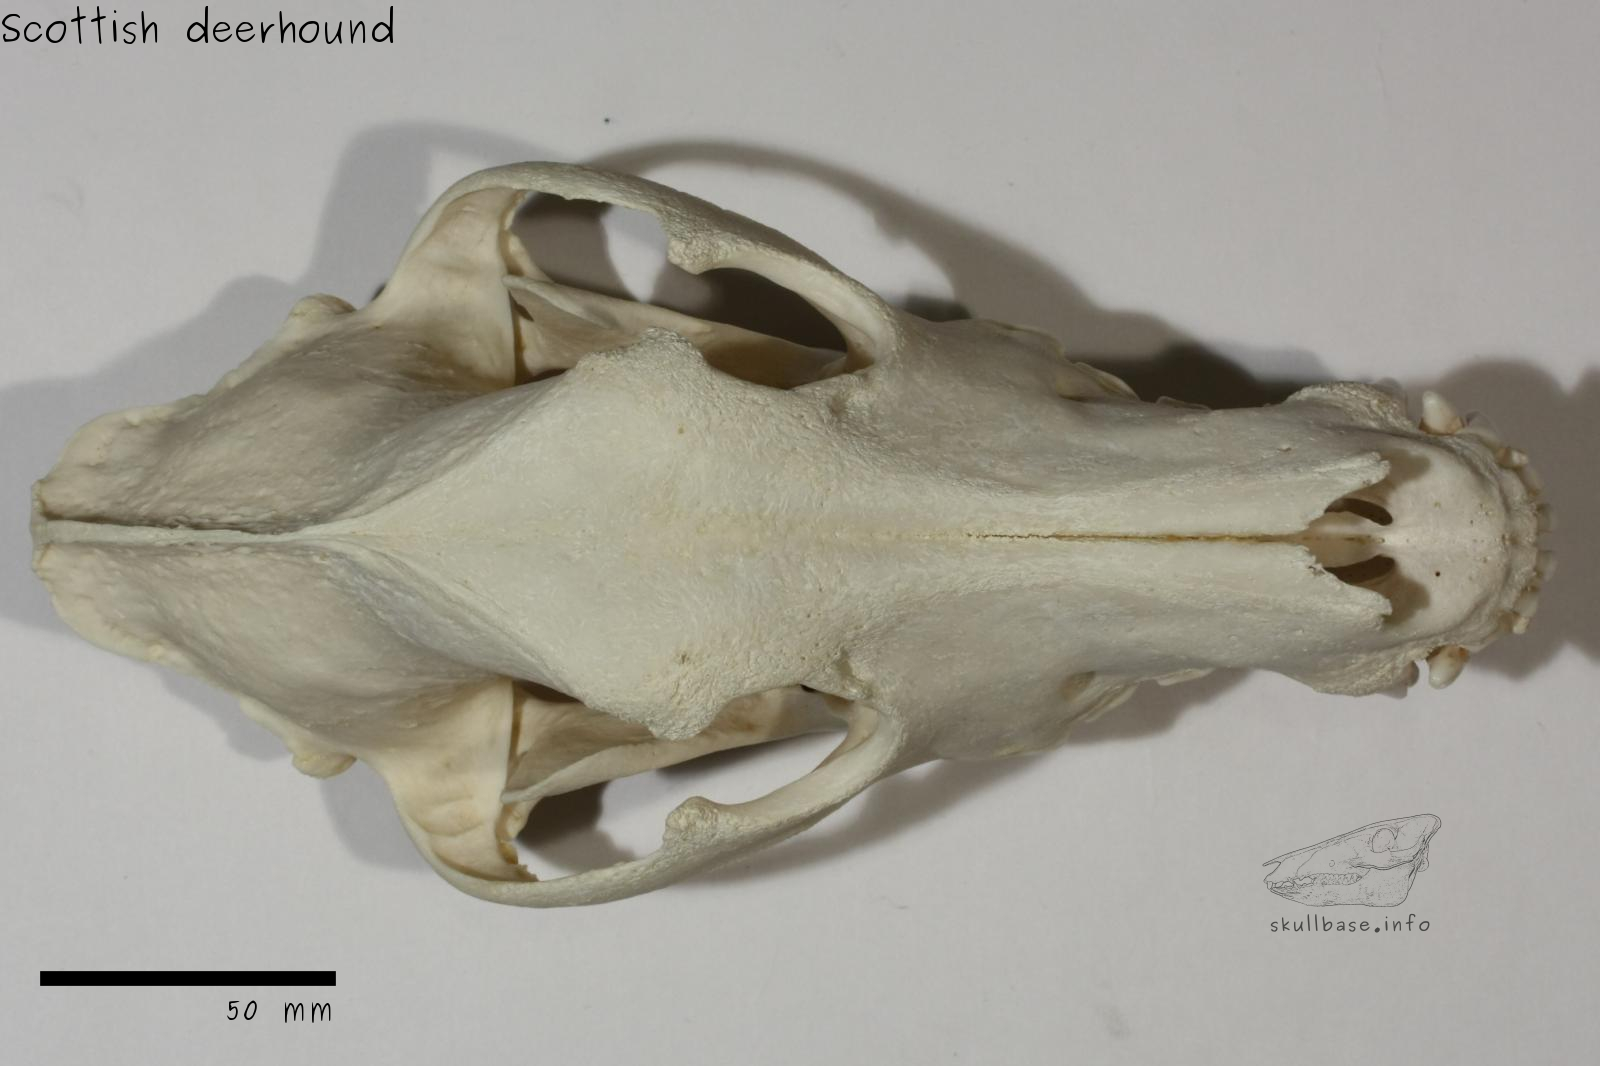 Scottish deerhound (Canis lupus familiaris) skull dorsal view